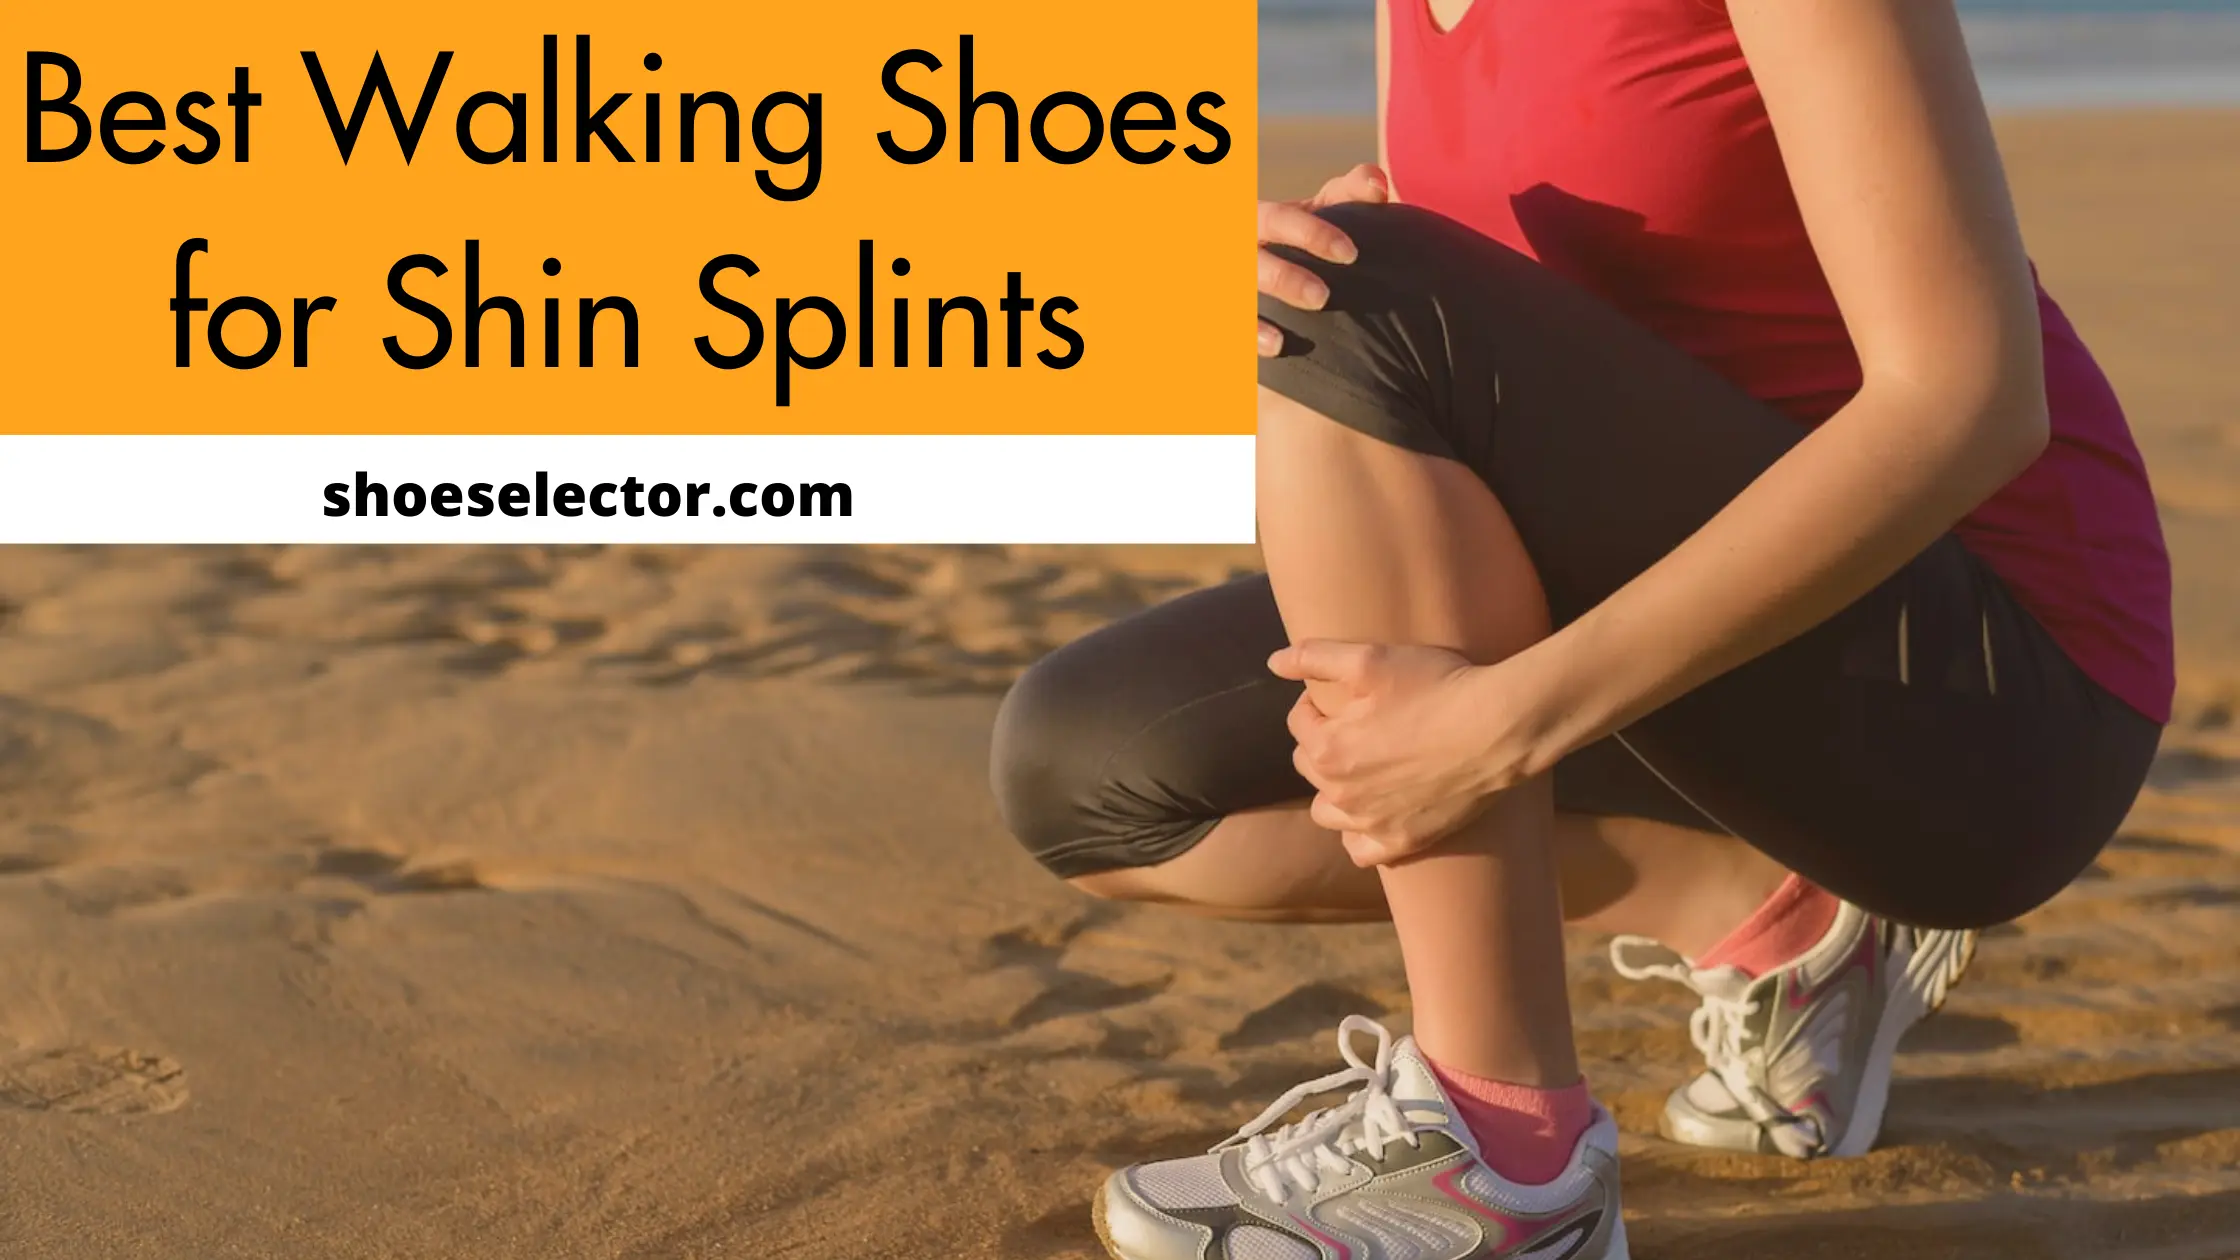 Best Walking Shoes For Shin Splints - Recommended Guide